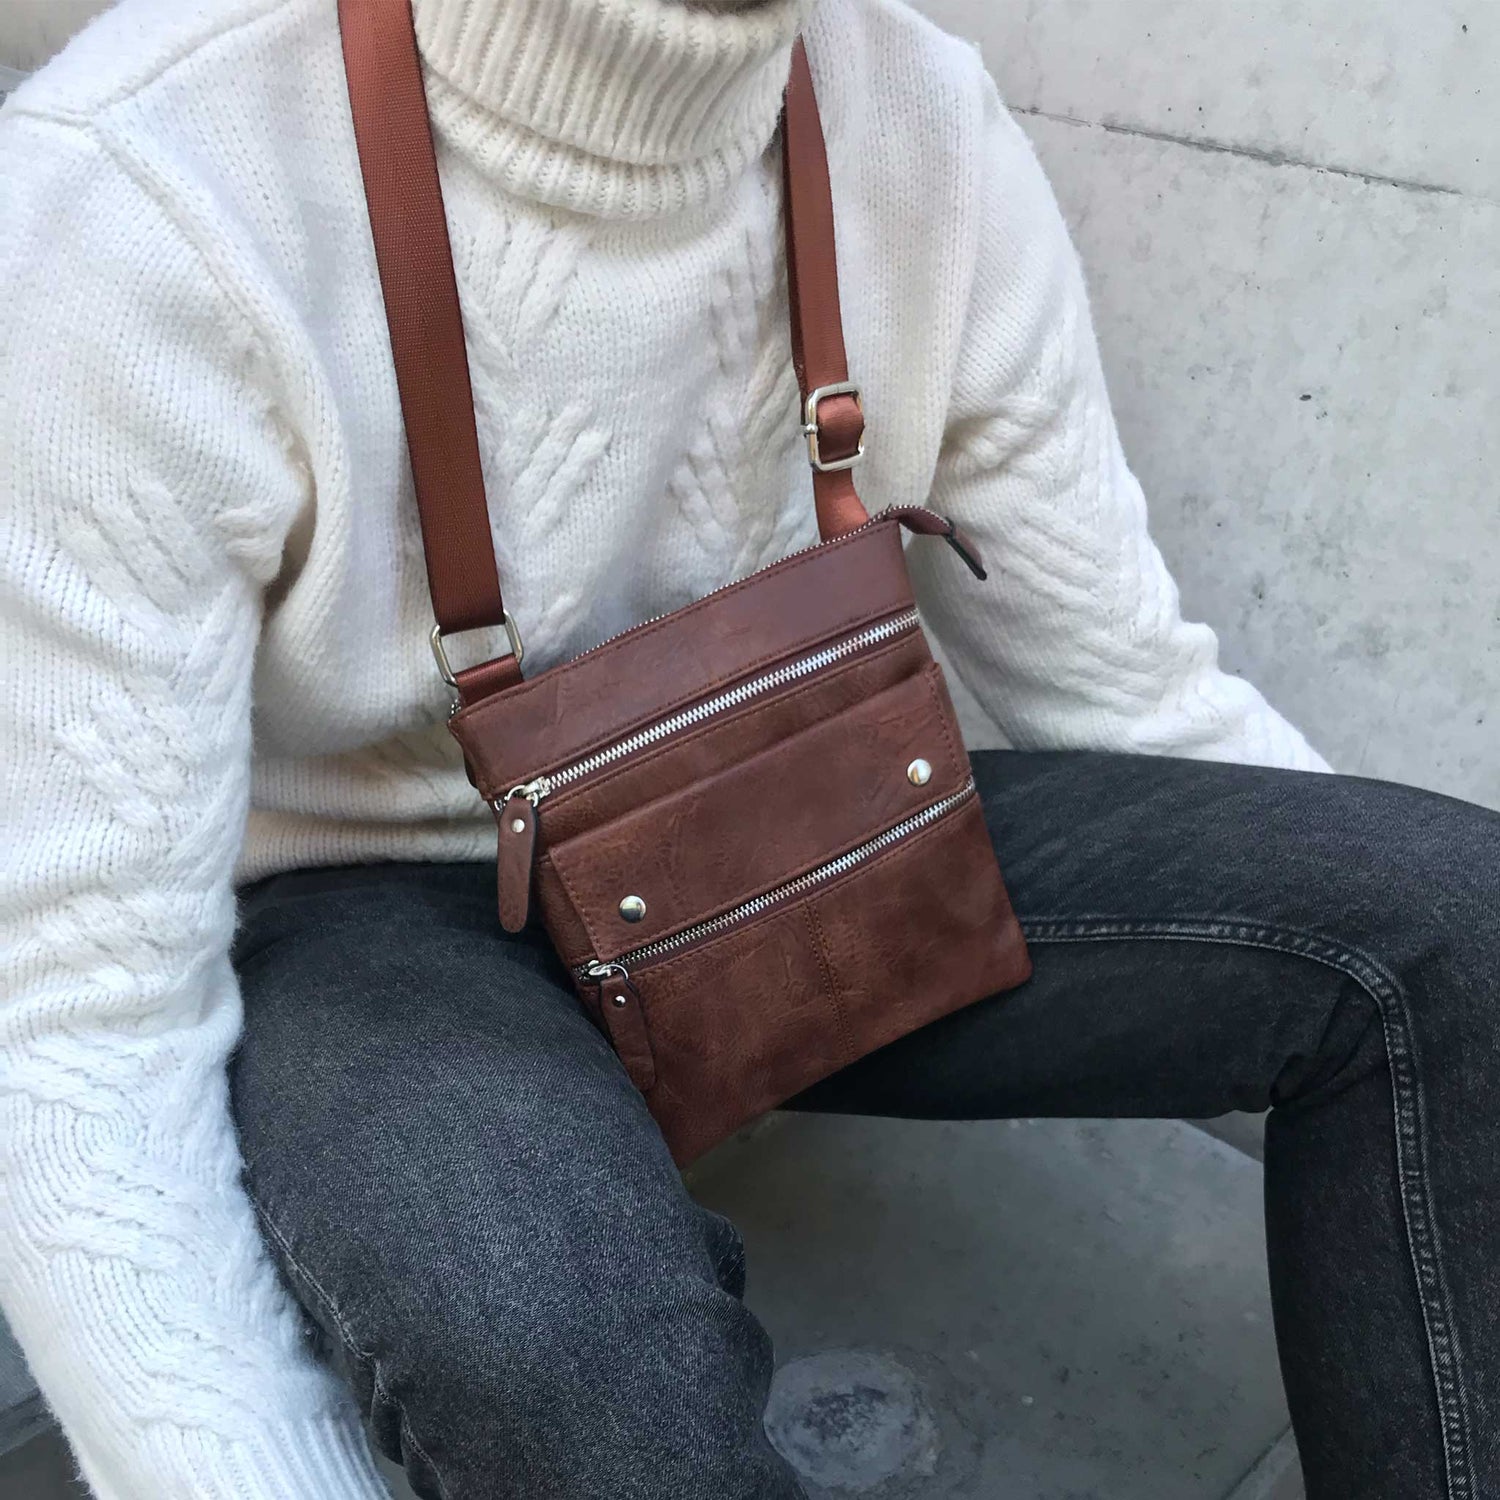 bagular crossbbody bag for men. Brown shoulder bag made from faux vegan leather. Soft, lightweight and durable bag, gift for him